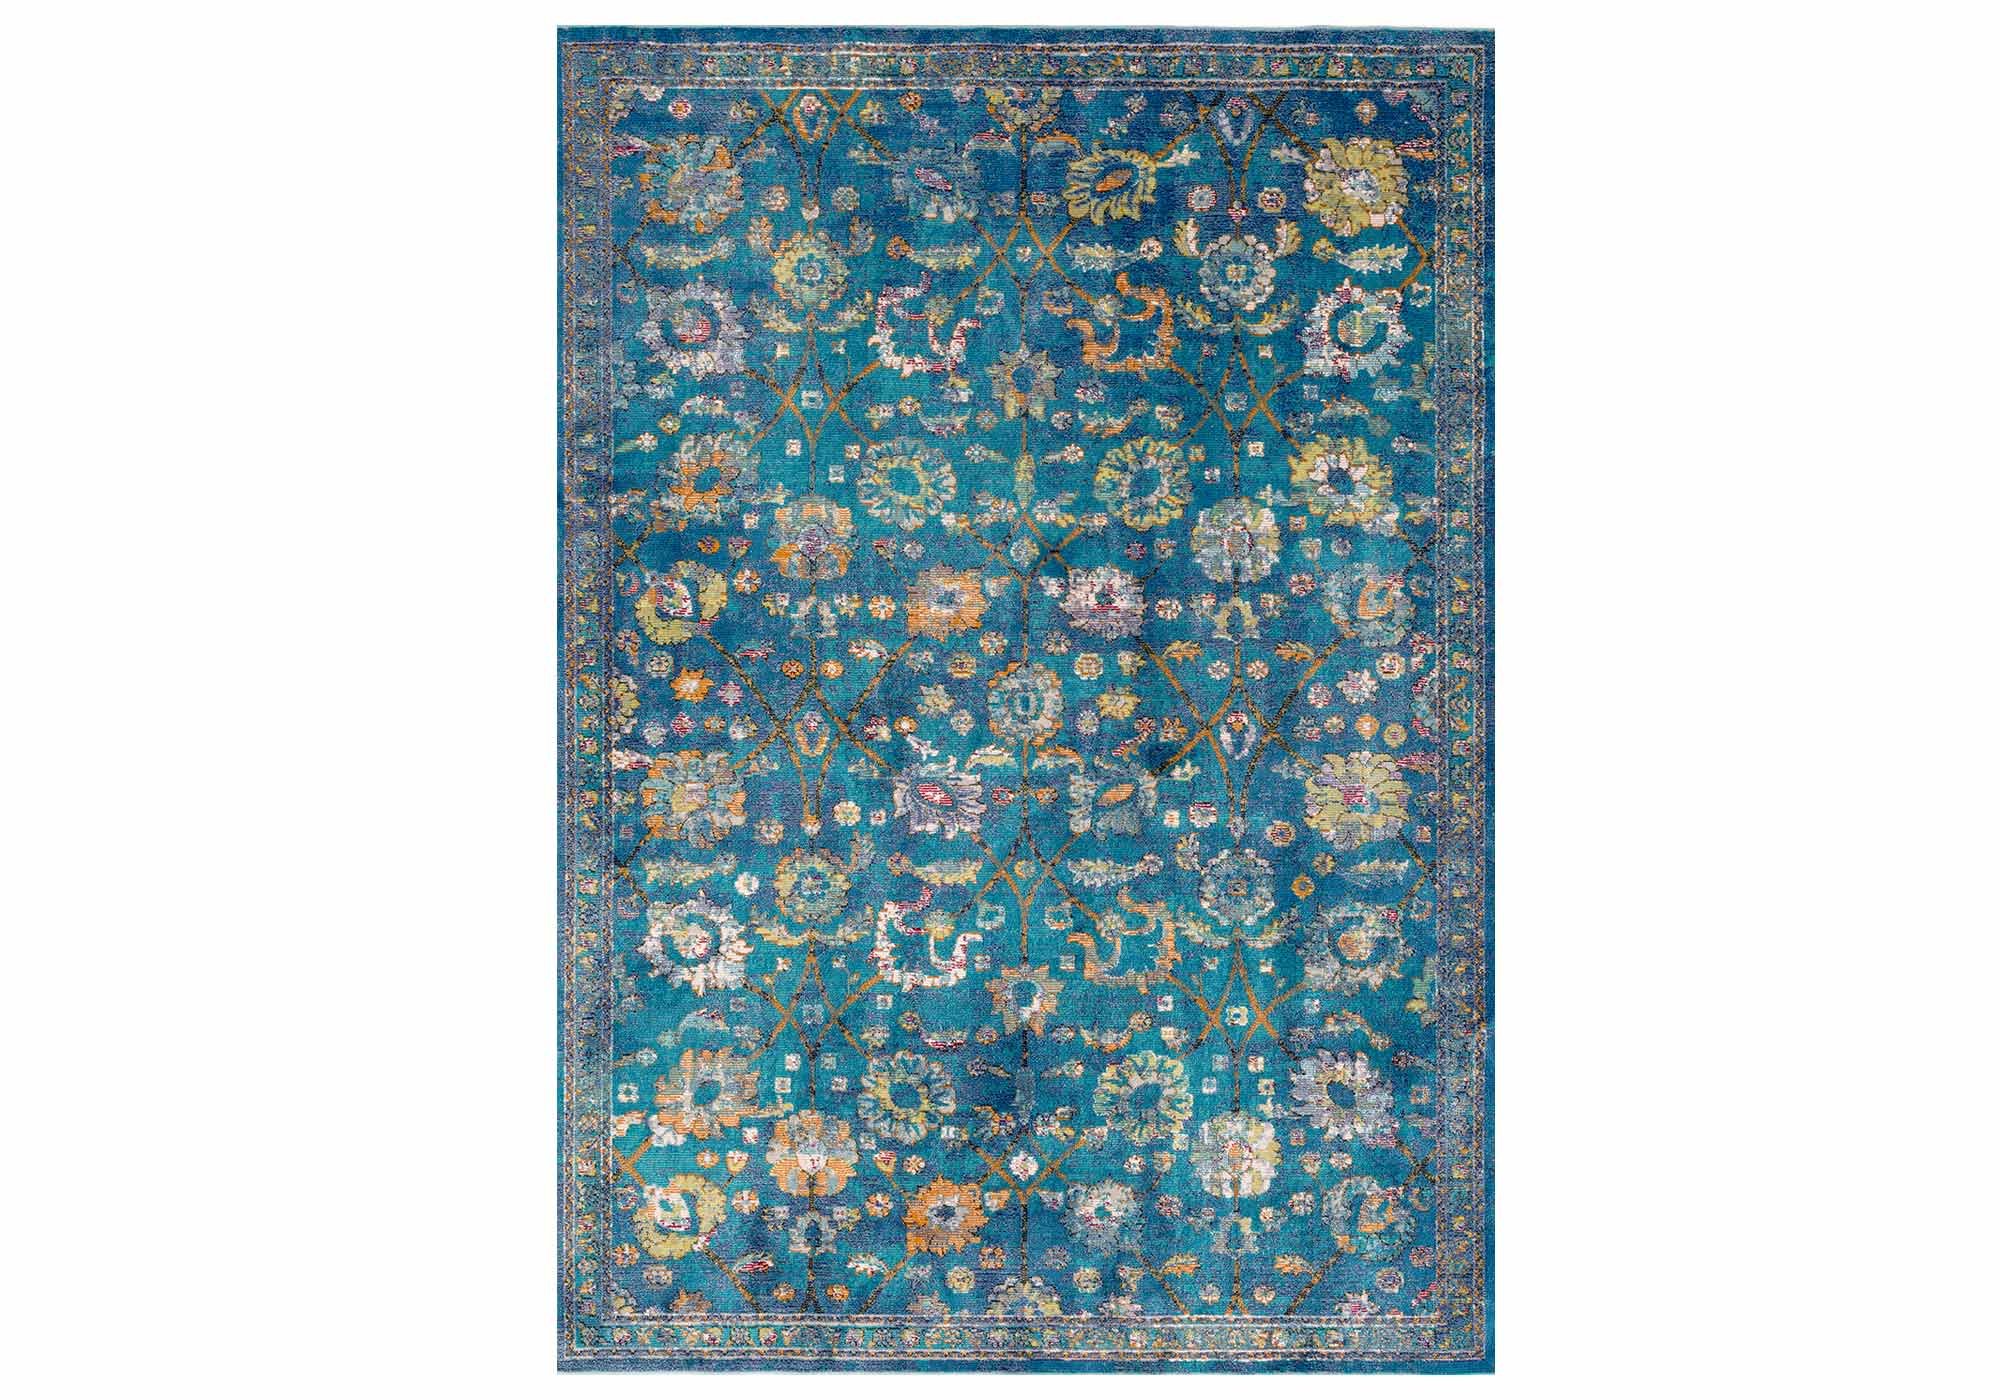 Festival Teppich 240 x 290 cm - mehrfarbig - 6 mm Höhe - Picasso 600